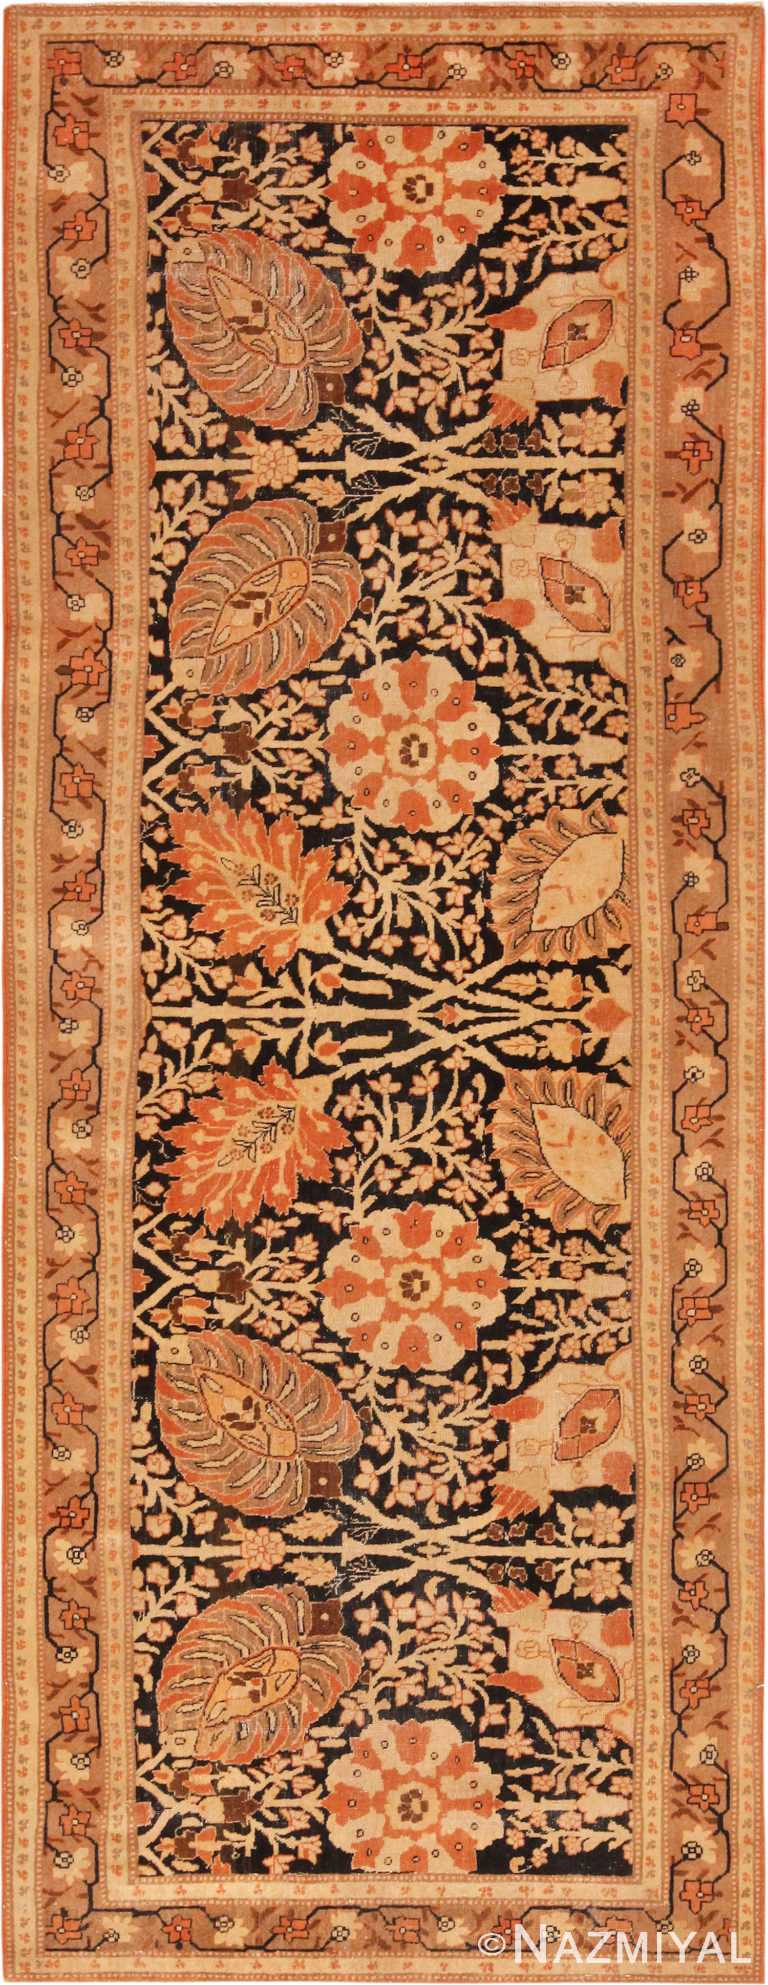 Antique Haji Jalili Persian Tabriz Rug 71979 by Nazmiyal Antique Rugs